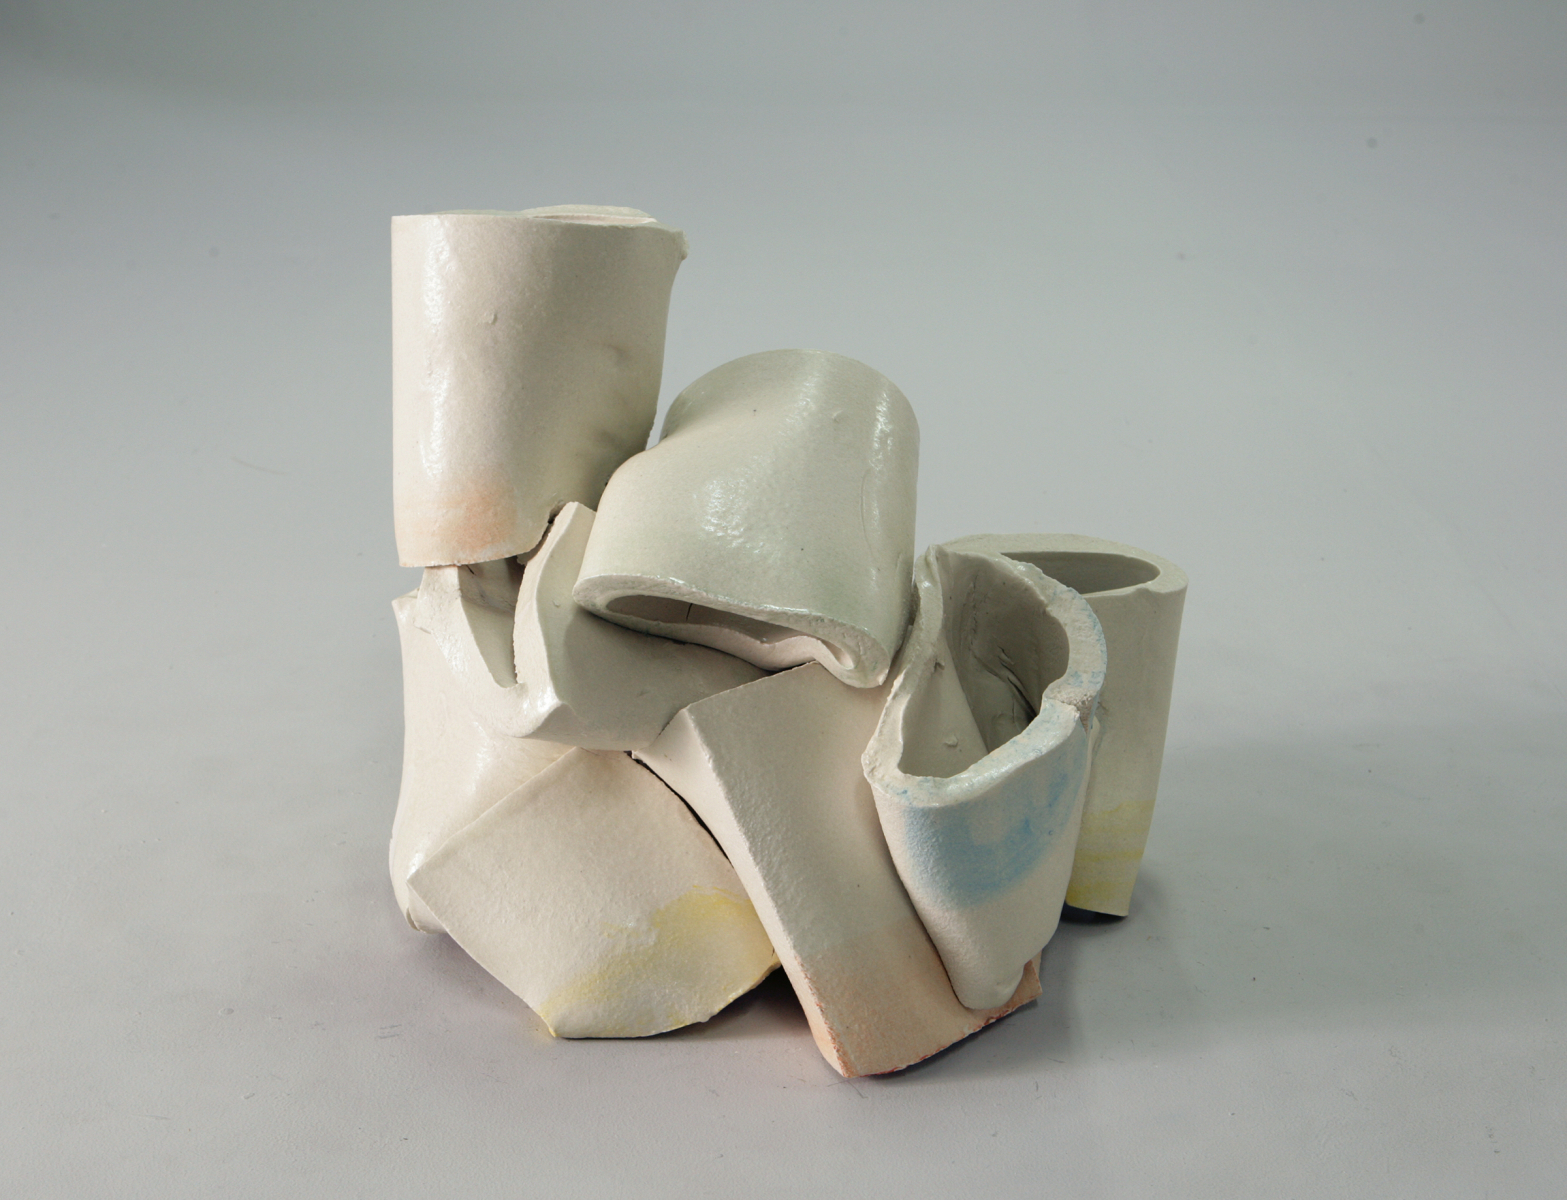 Becoming-13146, 2013, Ceramic, 47x52x45cm
